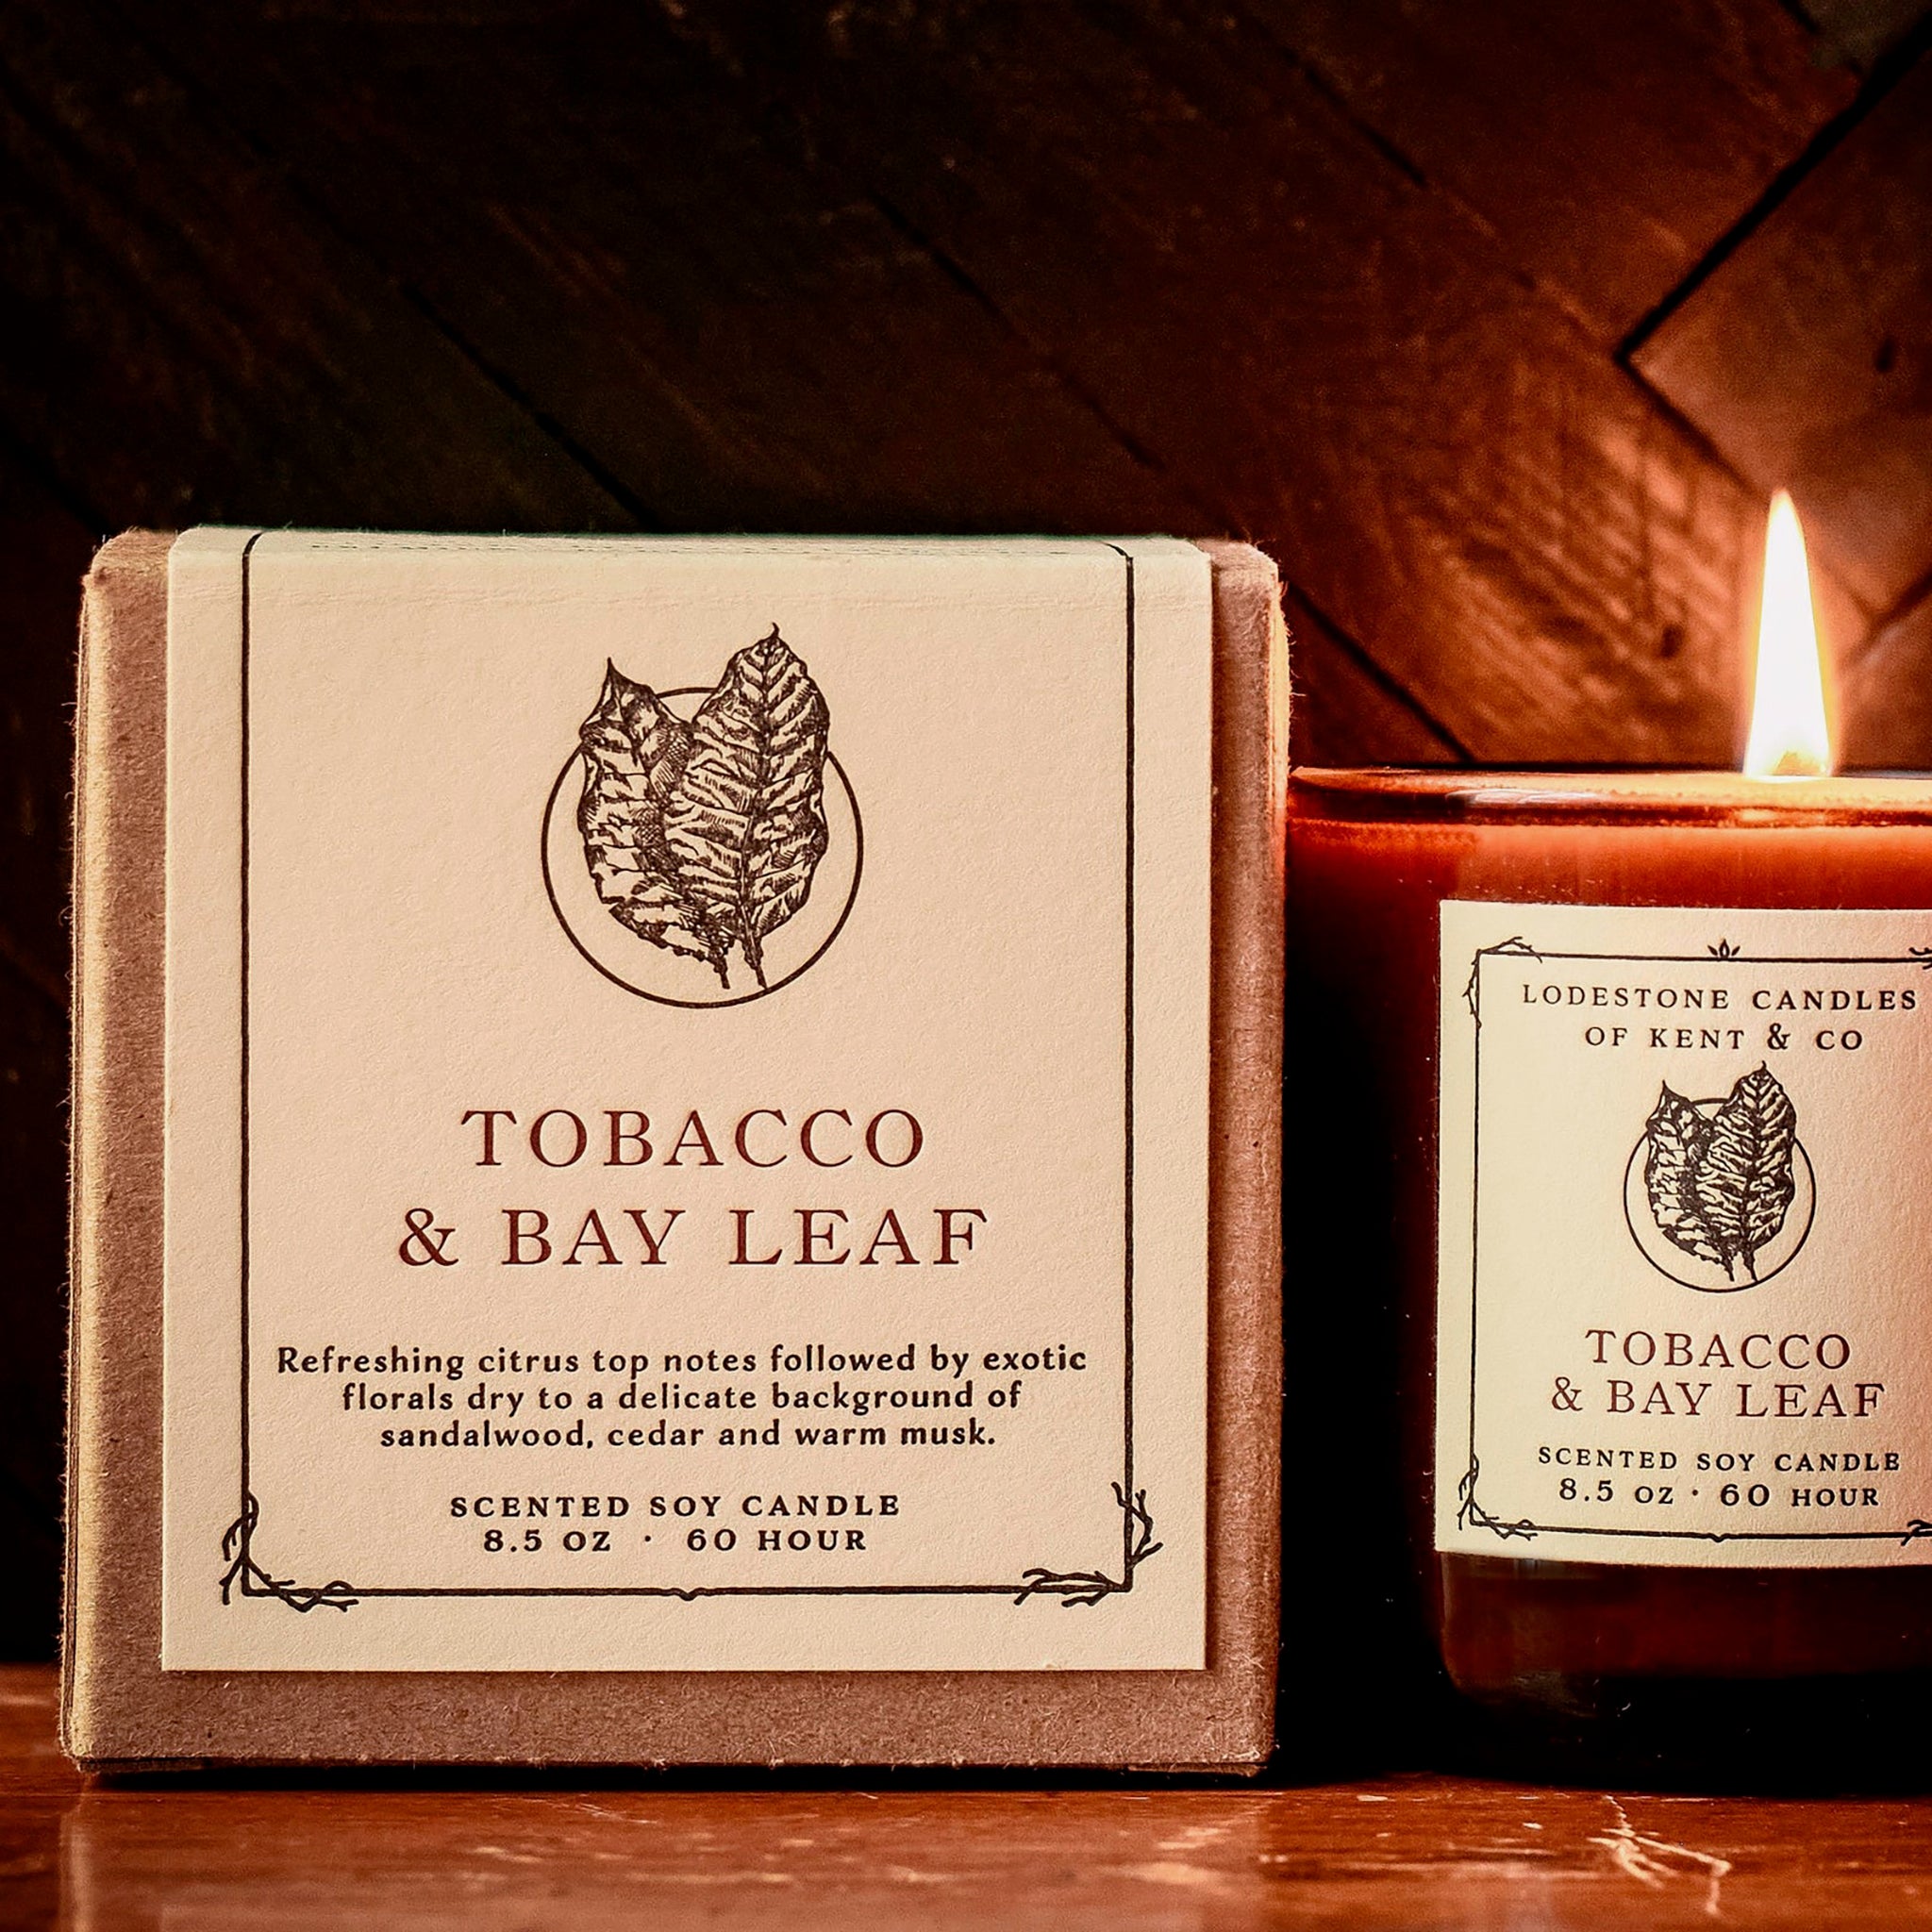 Lodestone Candles Tobacco & Bay Leaf